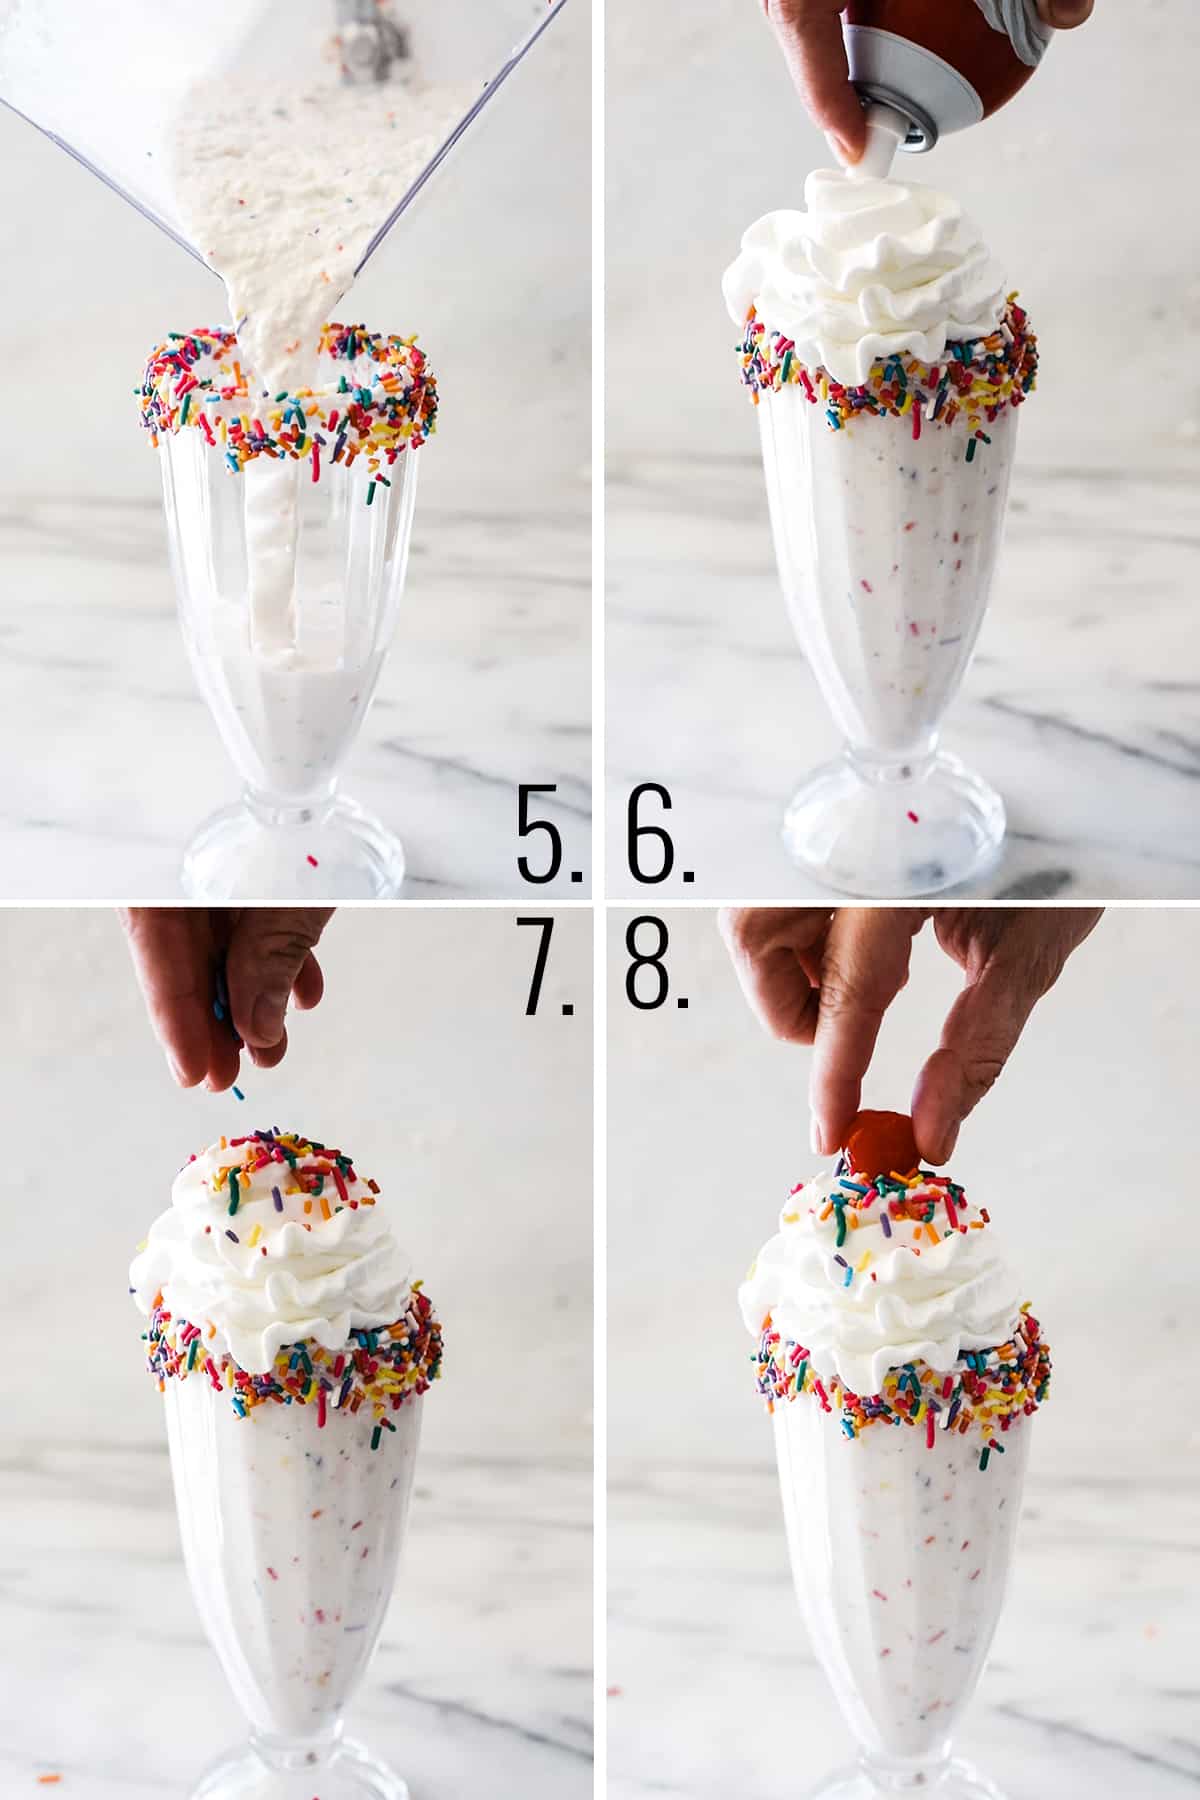 How to serve a cake shake.